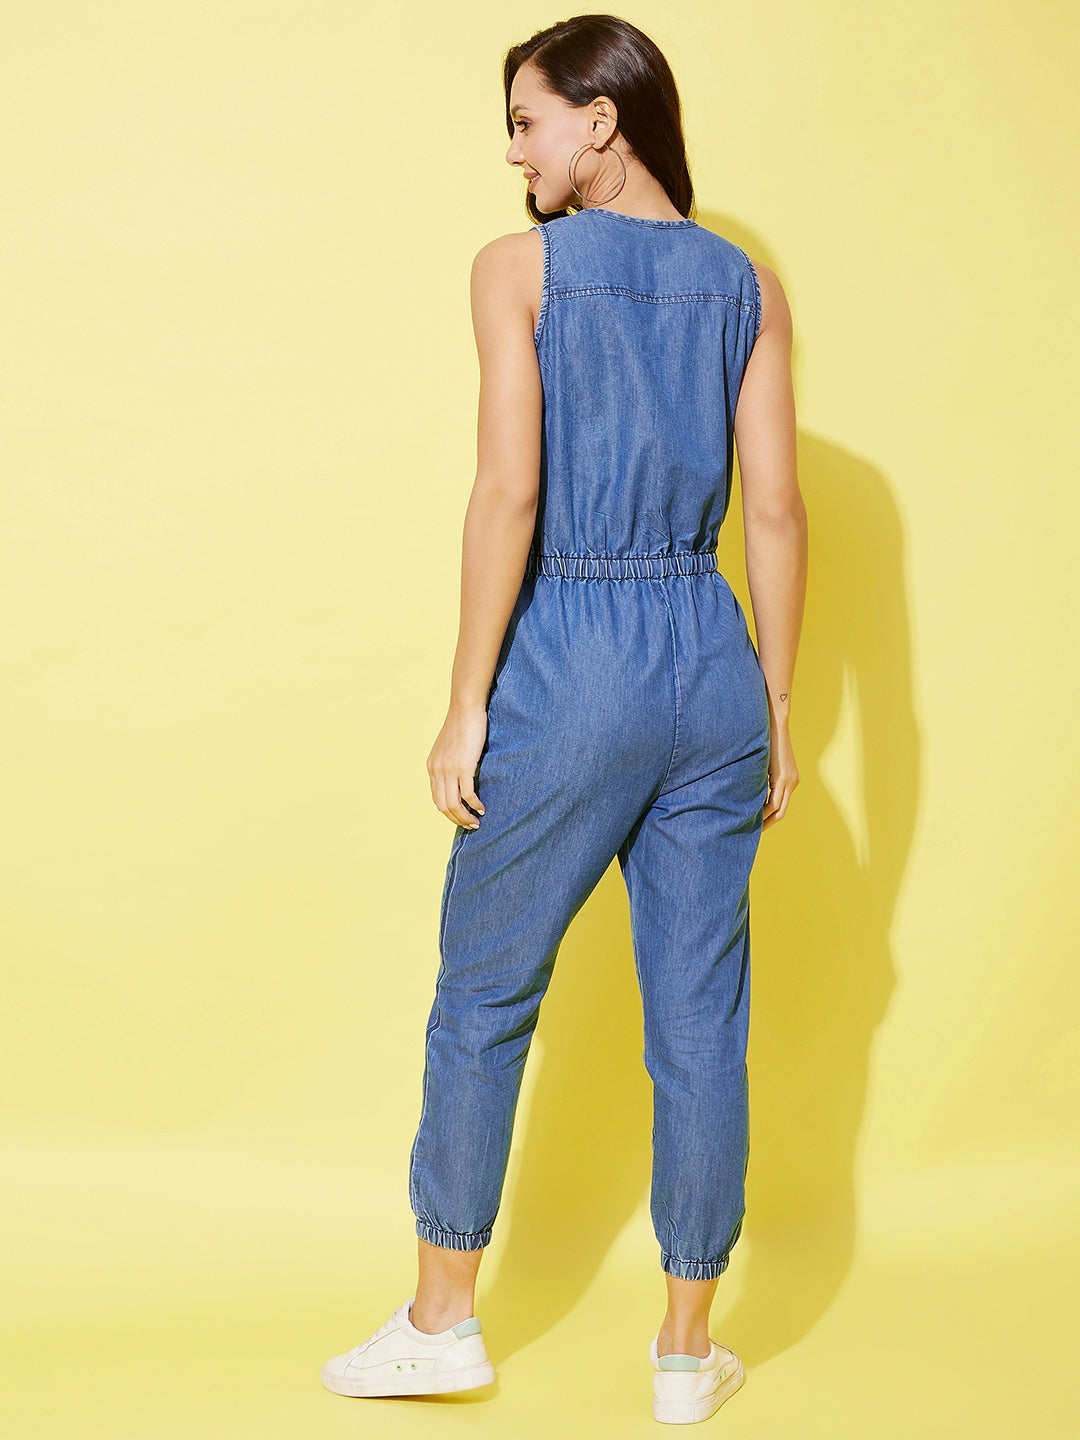 Women's Denim Jumpsuit With Neon Lace Insert - StyleStone